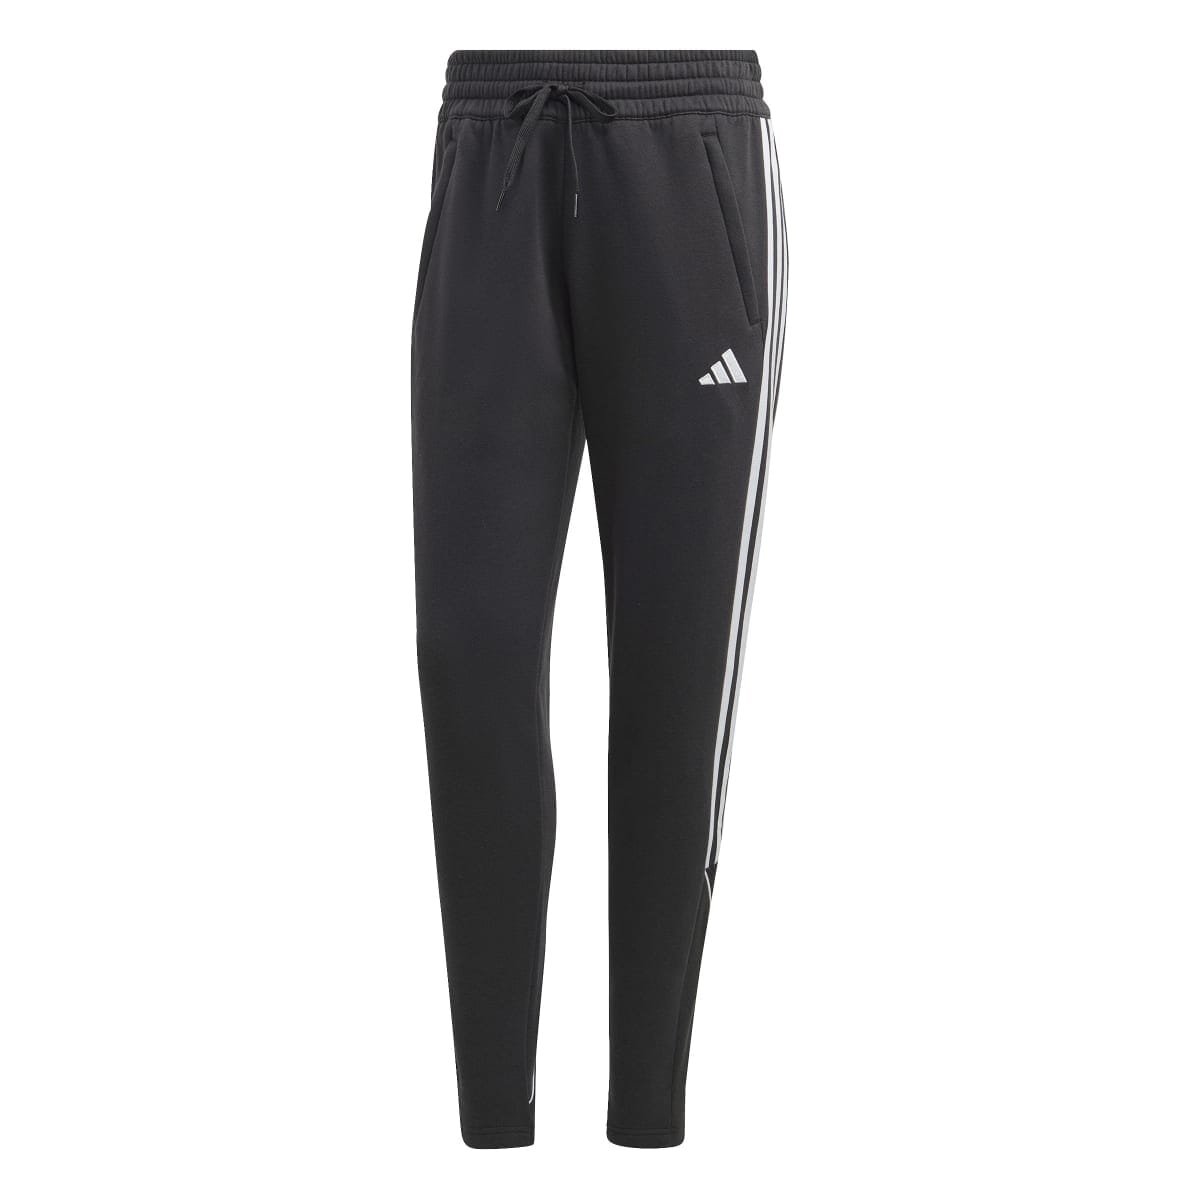  adidas Youth Soccer Condivo 16 Pants, Black/White